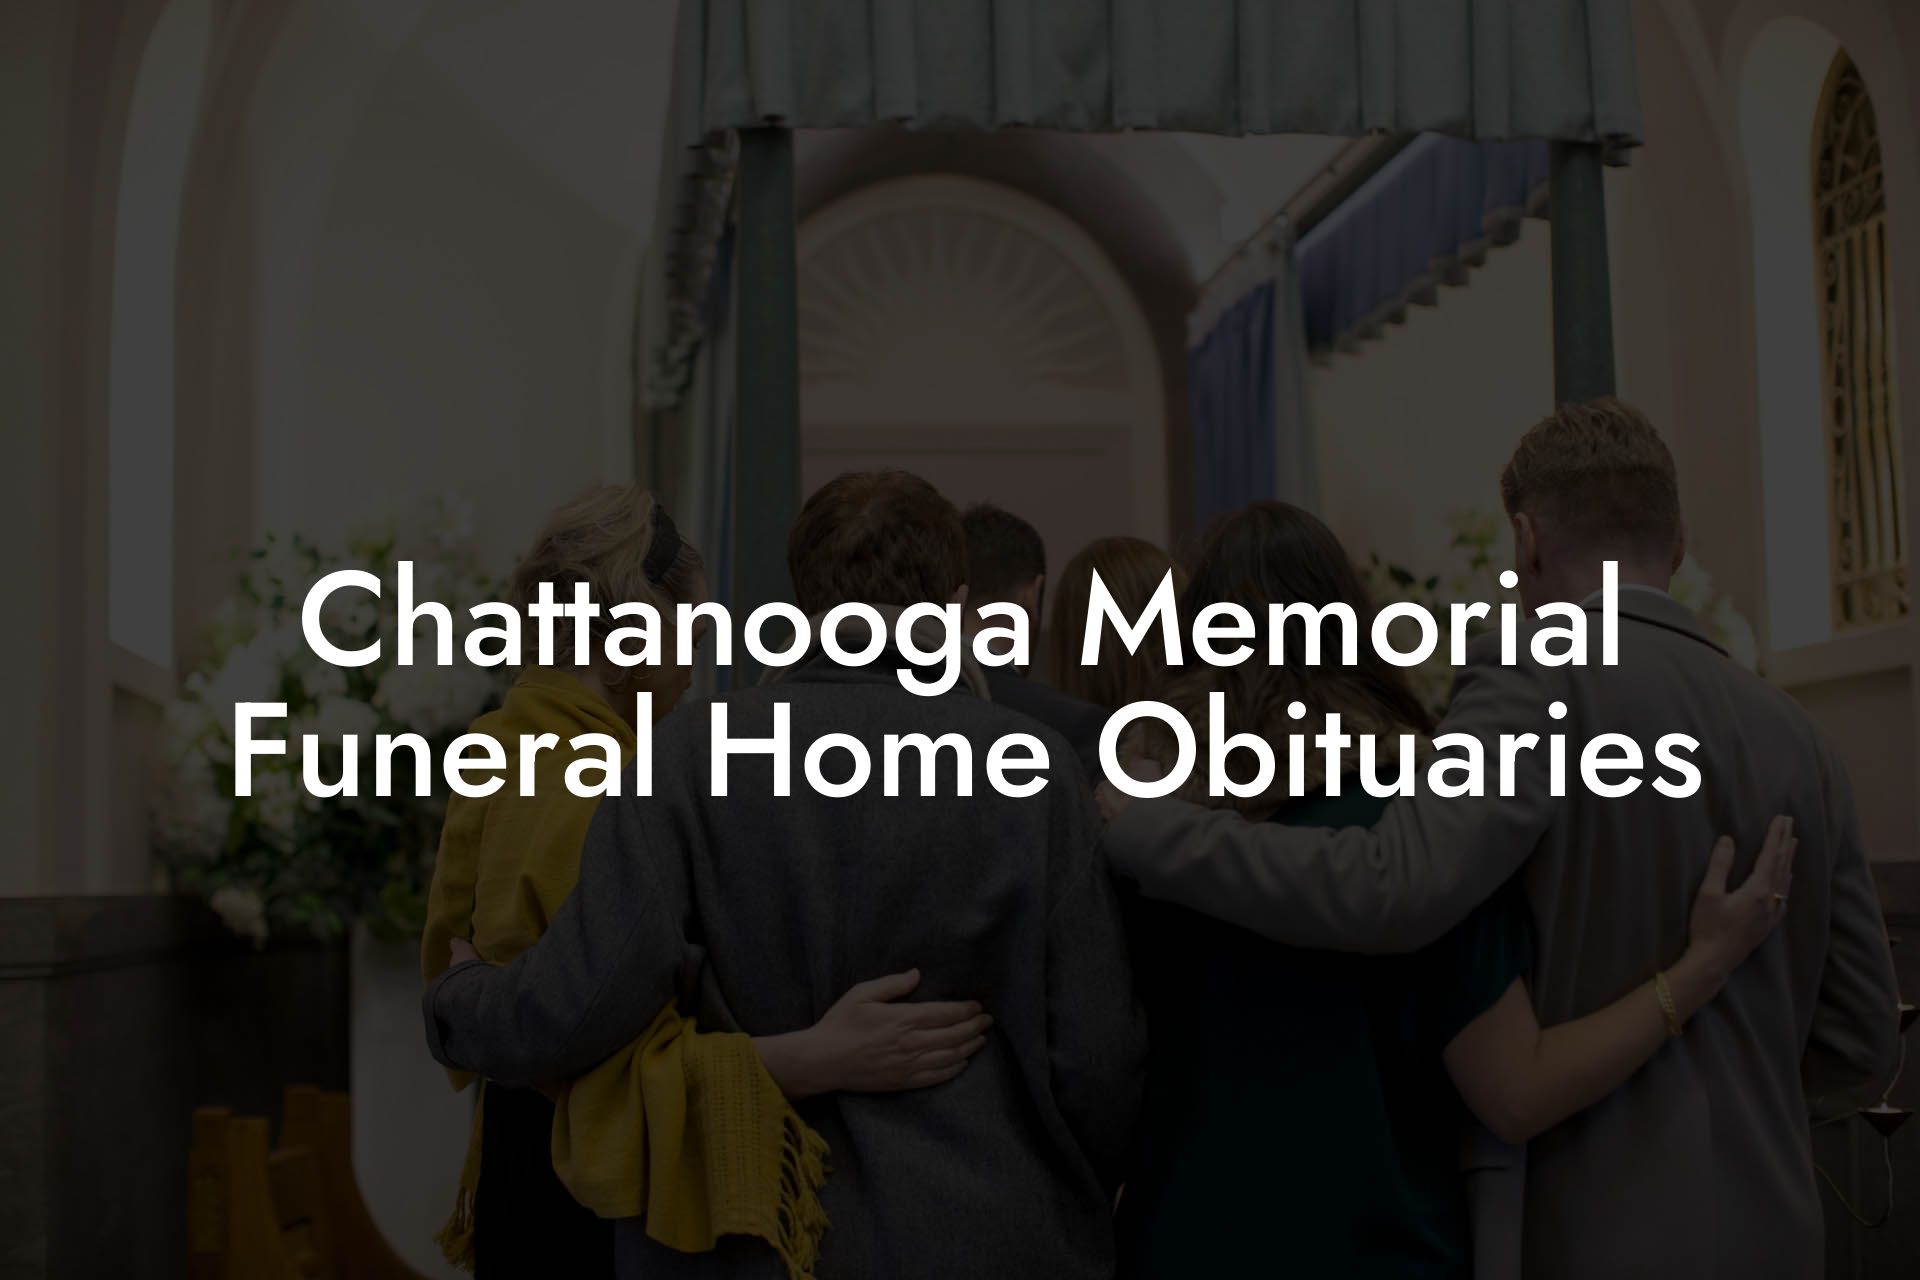 Chattanooga Memorial Funeral Home Obituaries